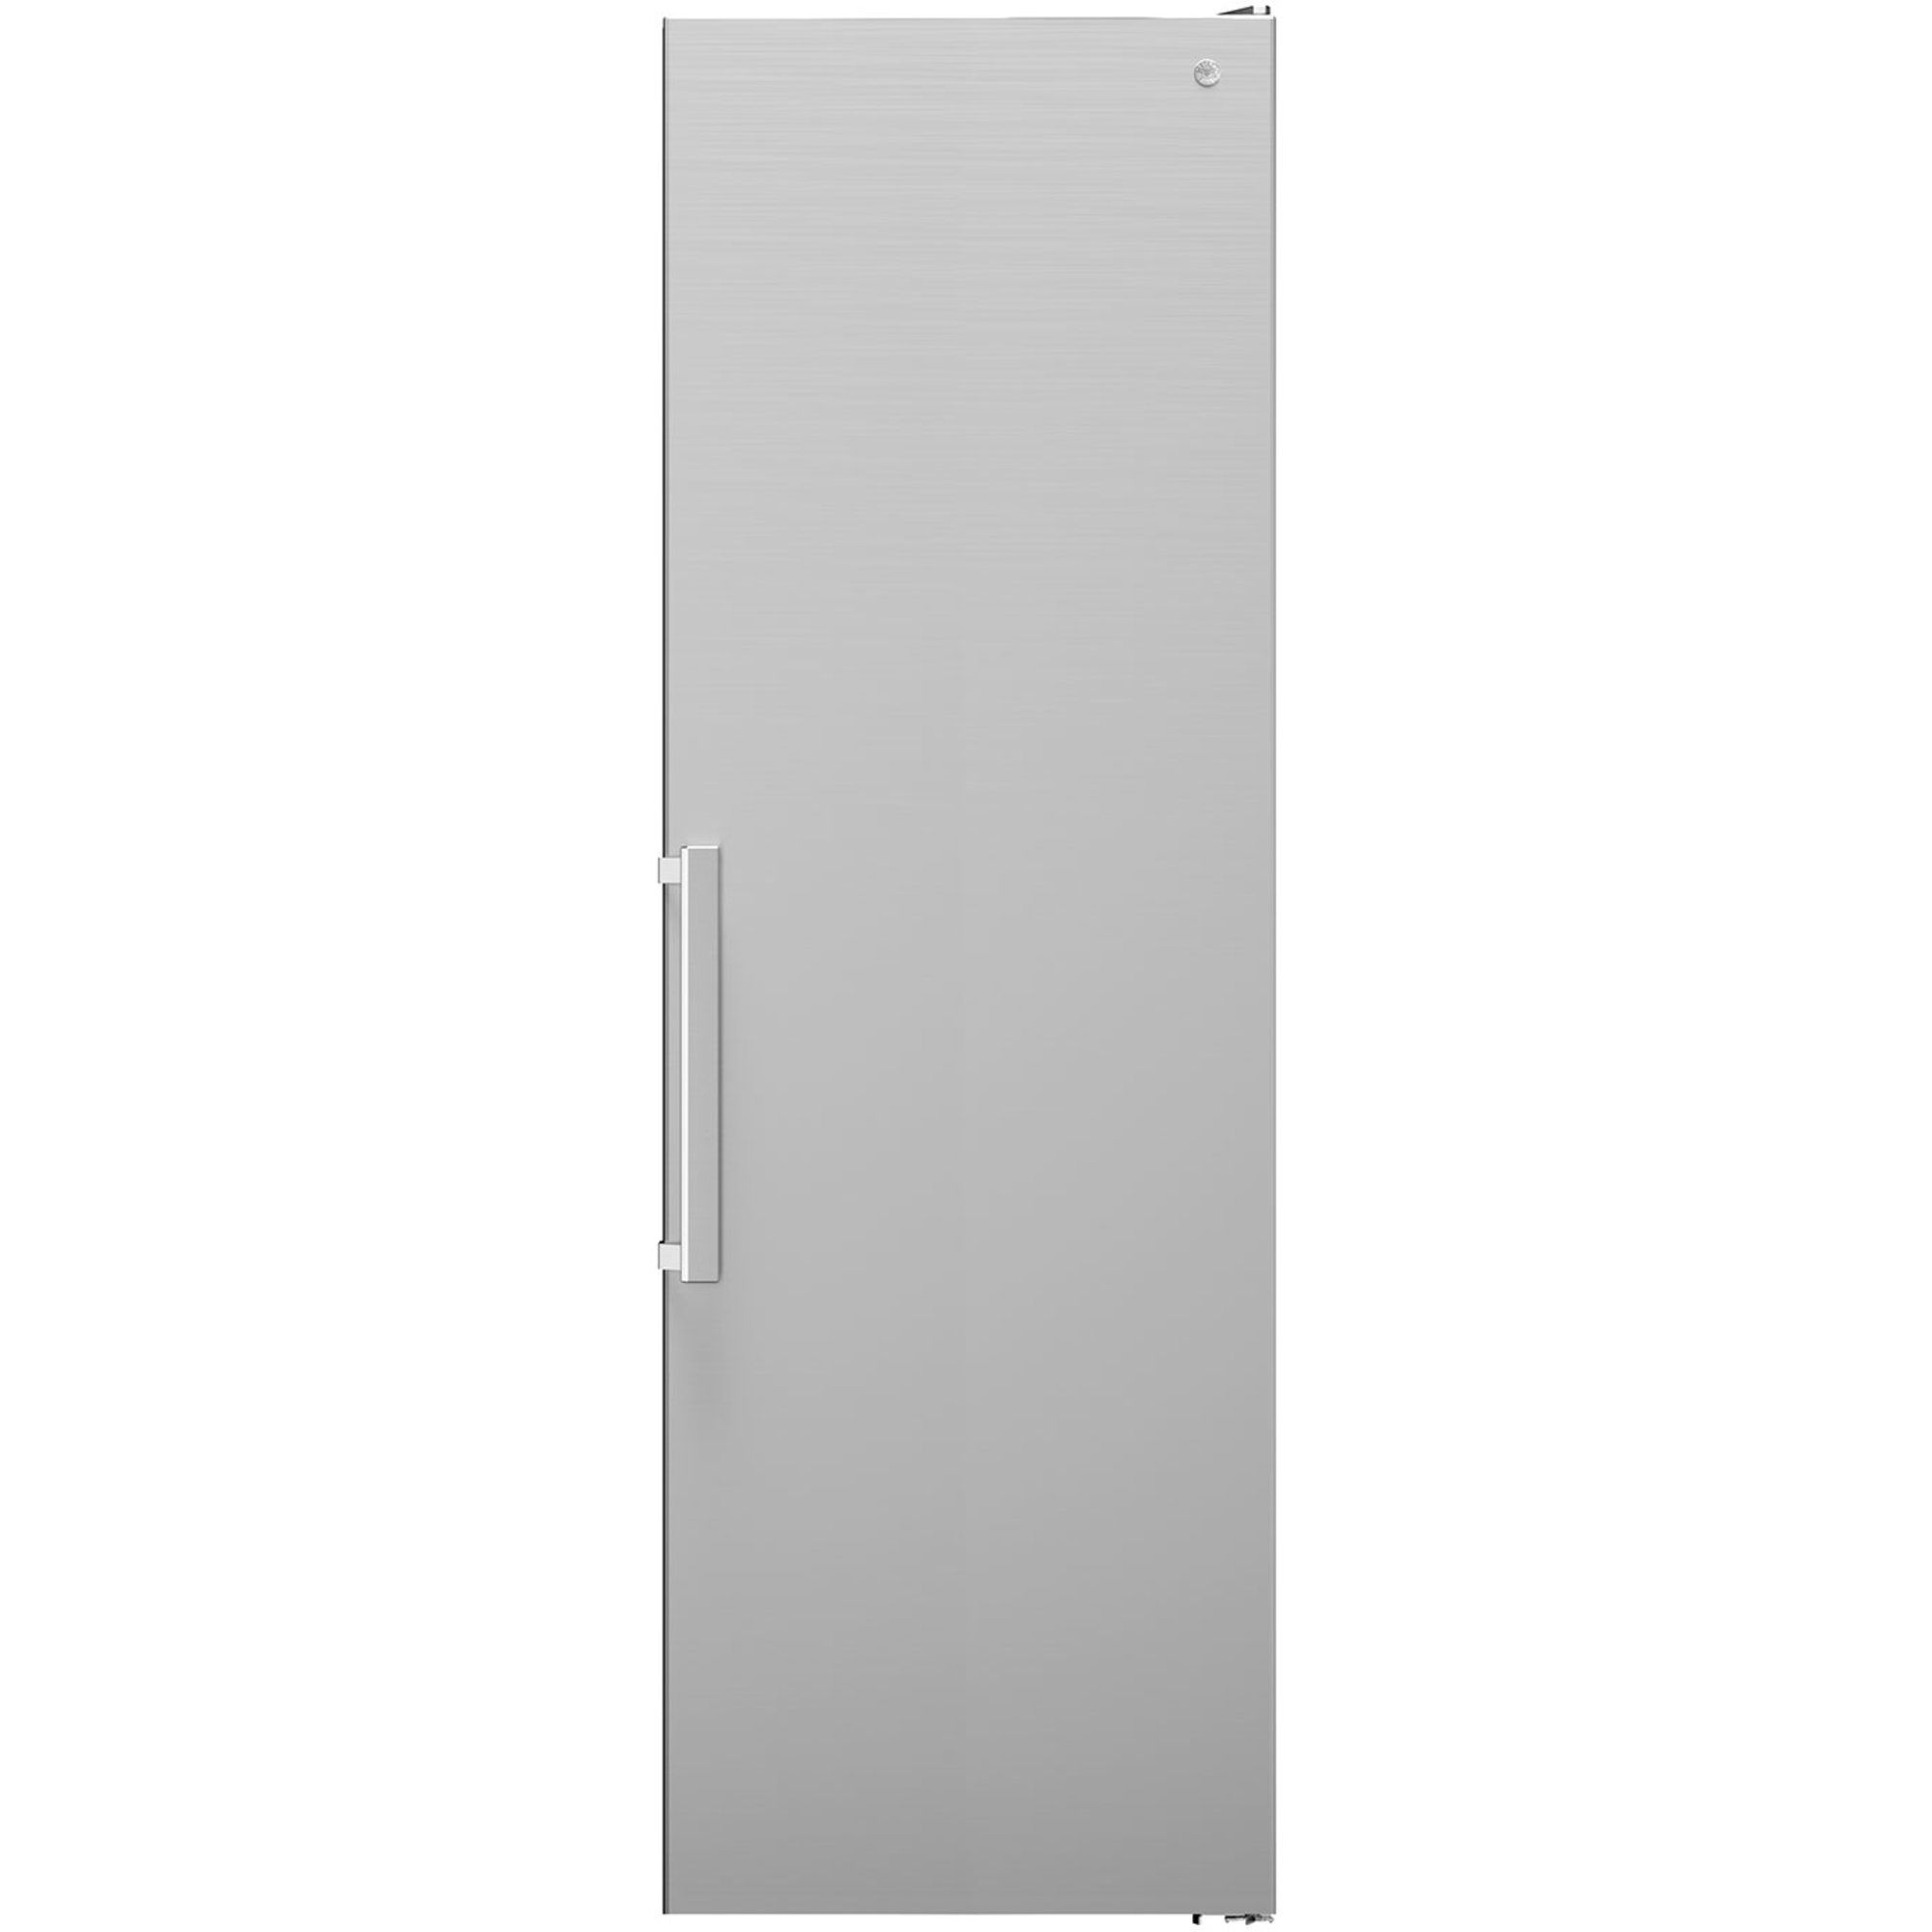 Bertazzoni Professional kylskåp fristående 186 cm, rostfri